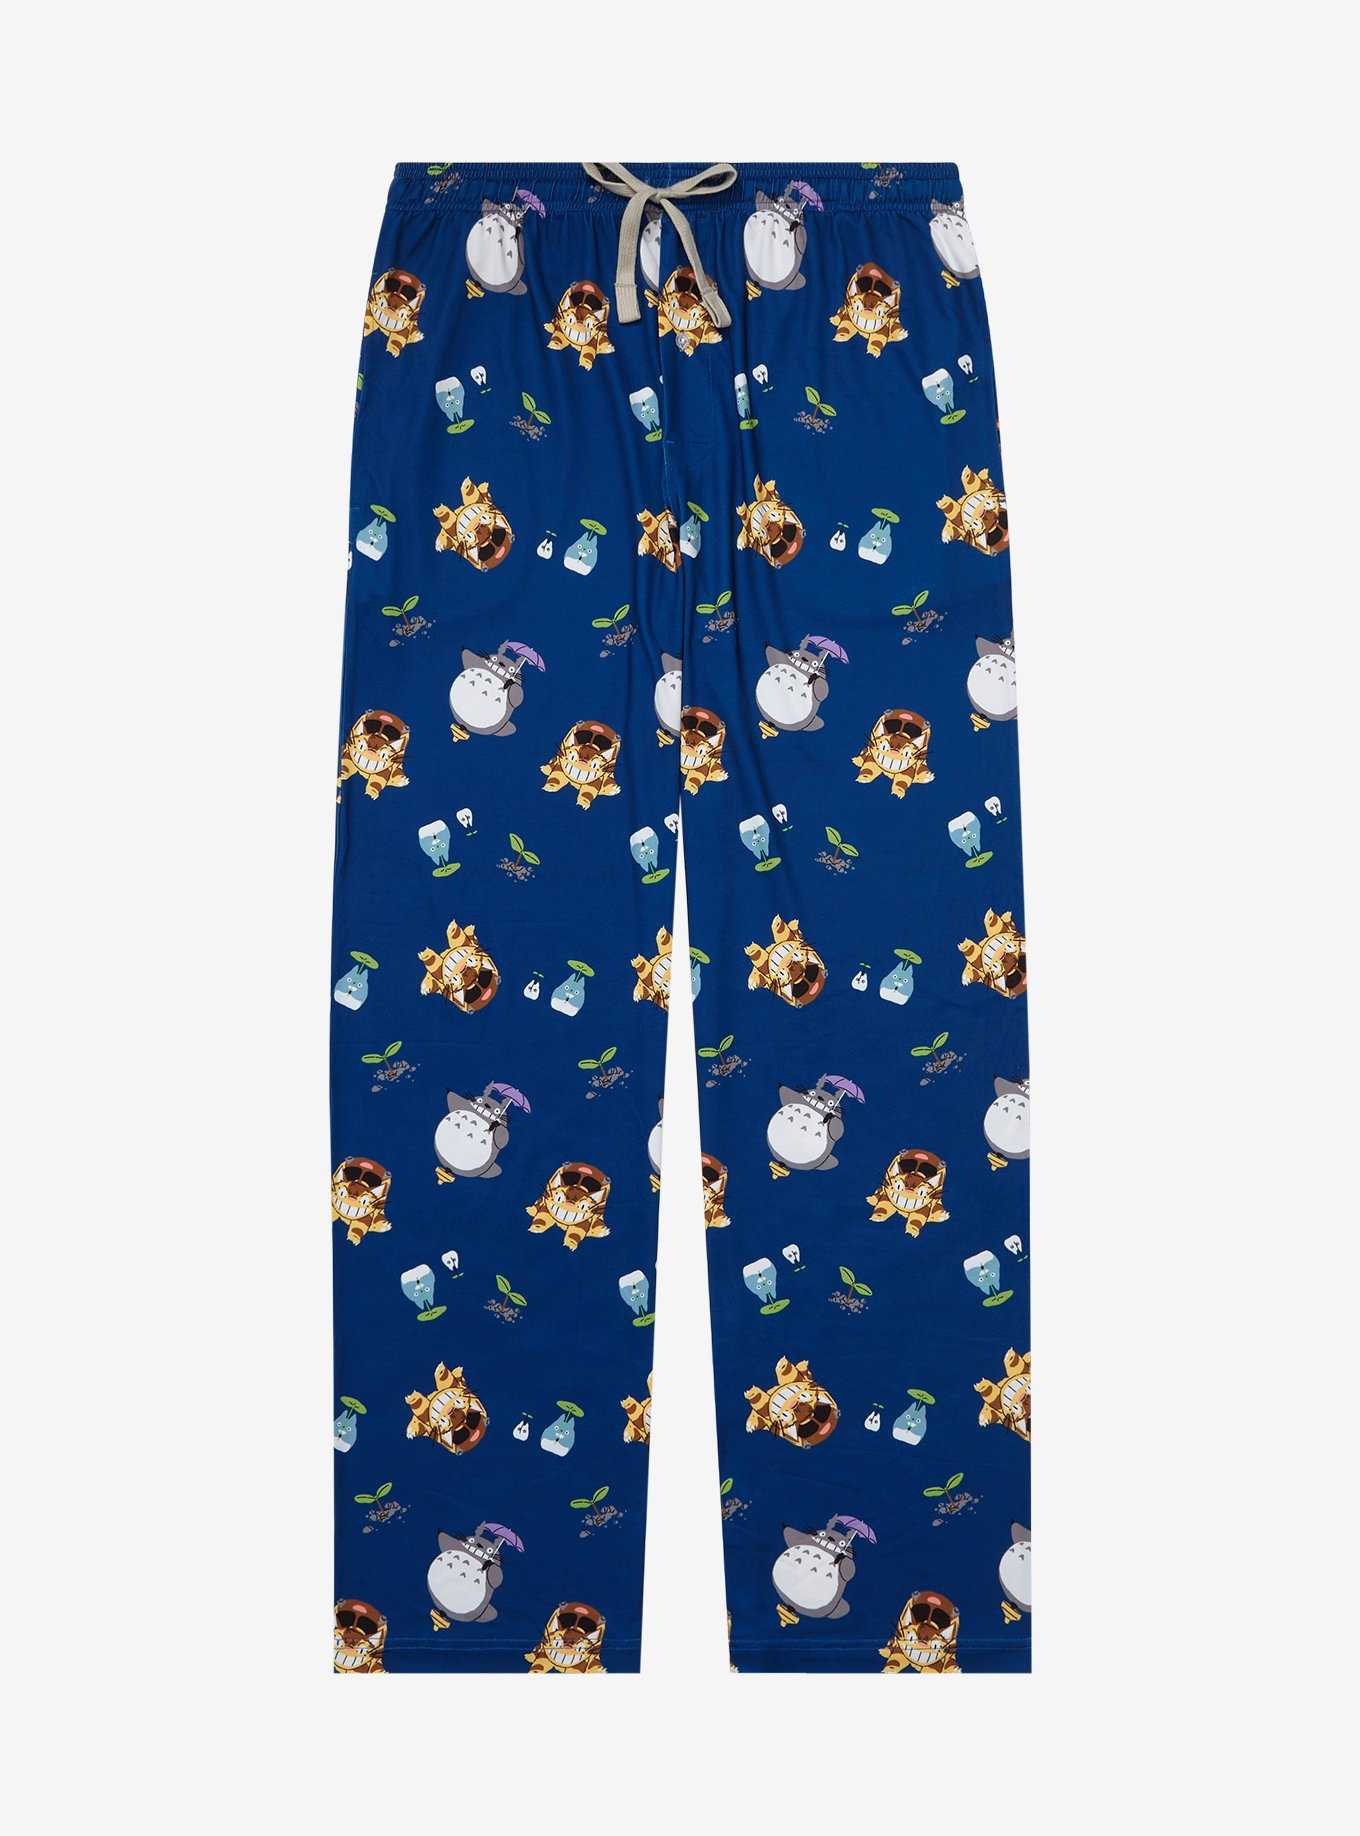 Disney's Frozen Men's Top & Bottoms Pajama Set by Jammies For Your Families